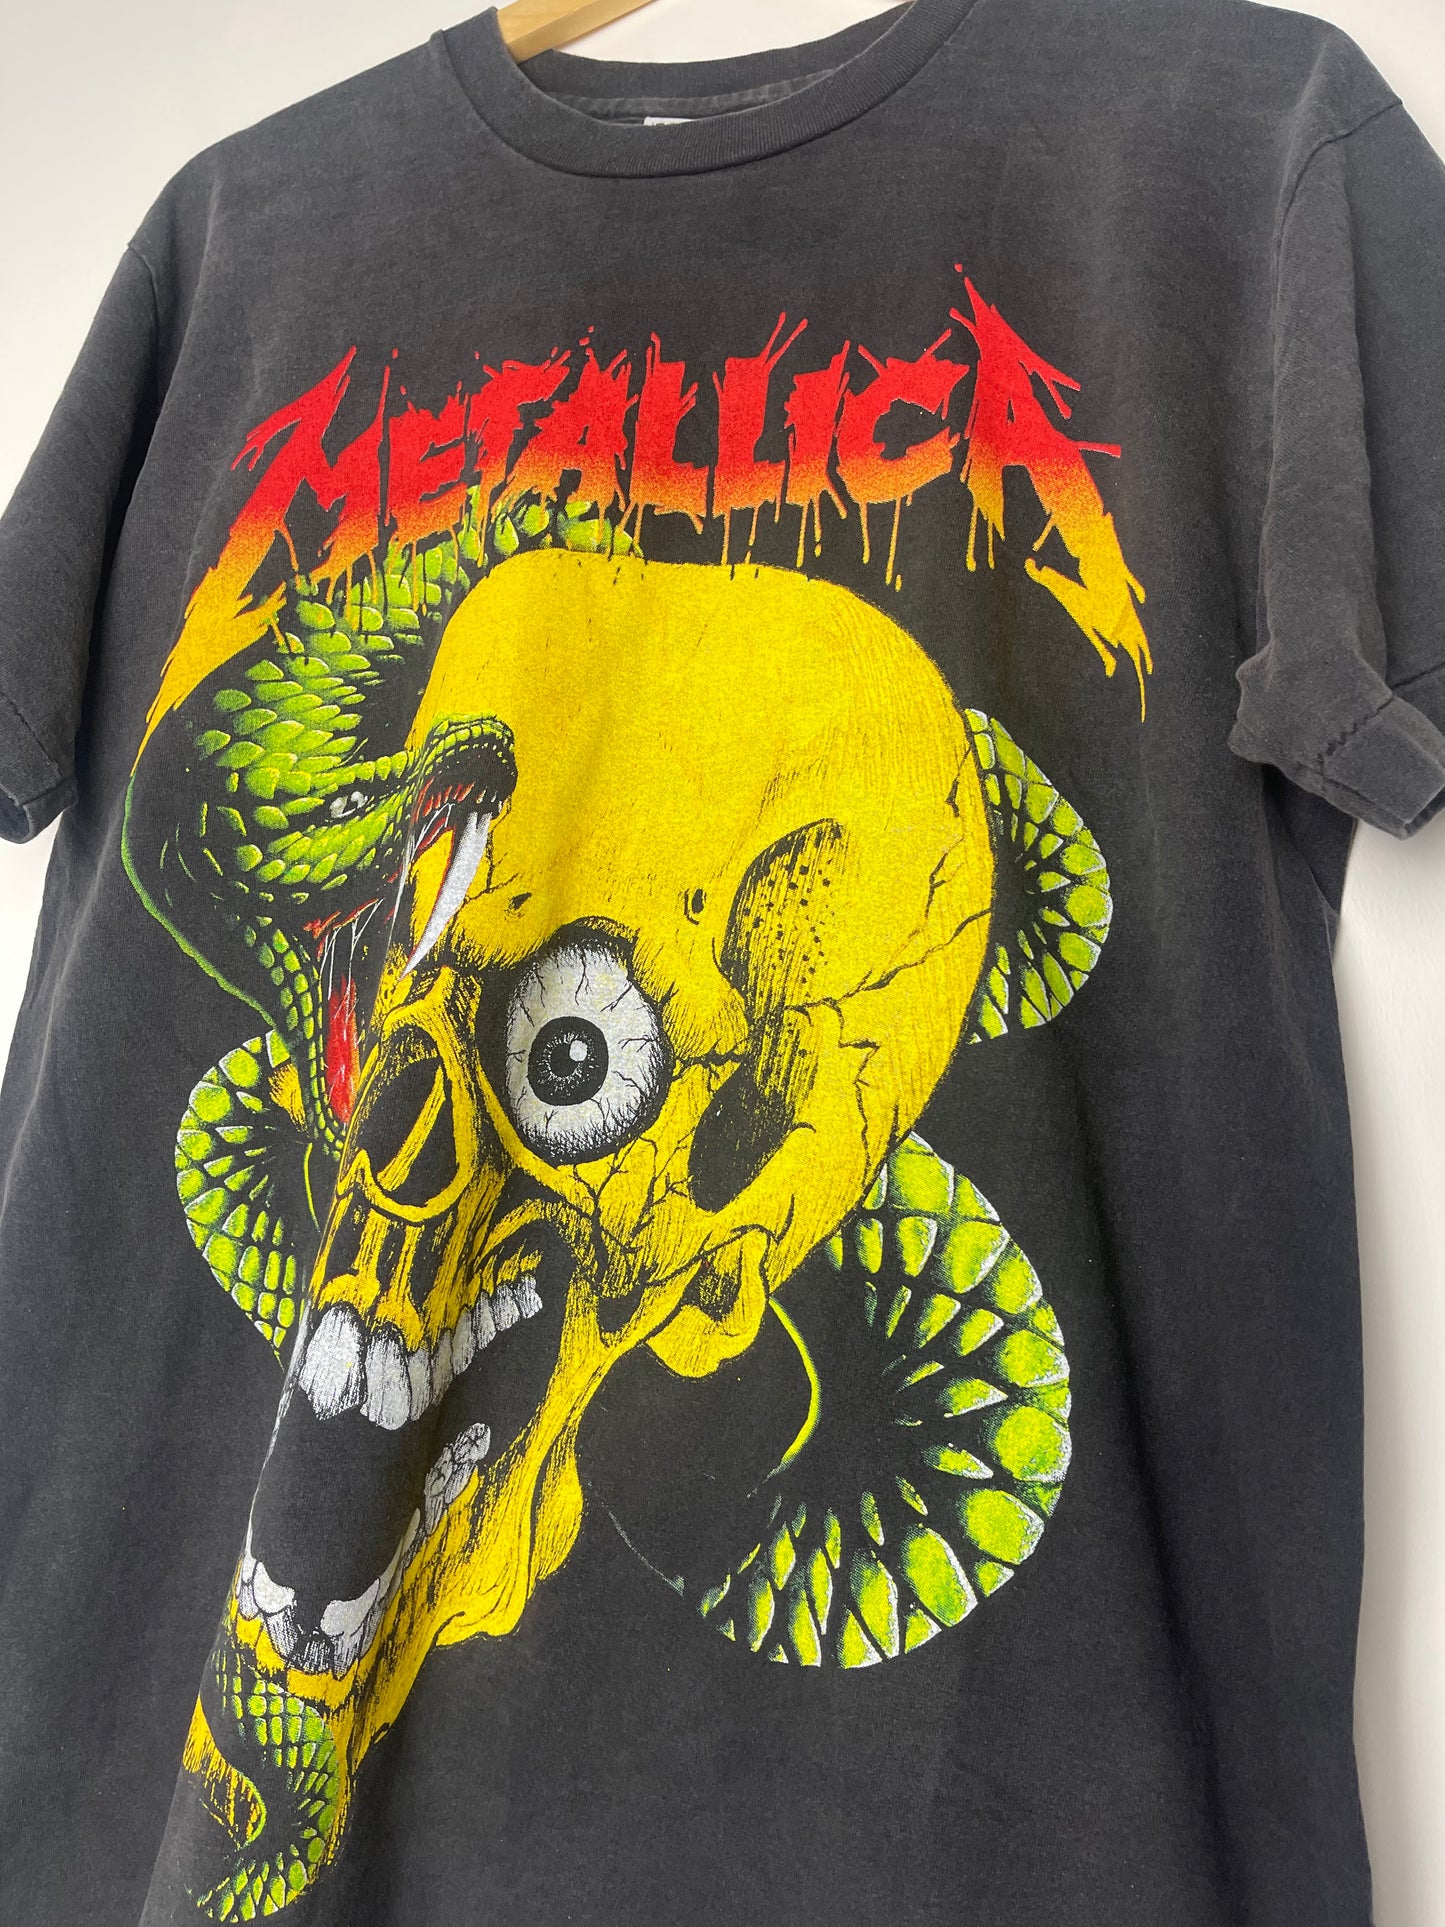 Vintage Style Metallica Monster T-shirt - Large